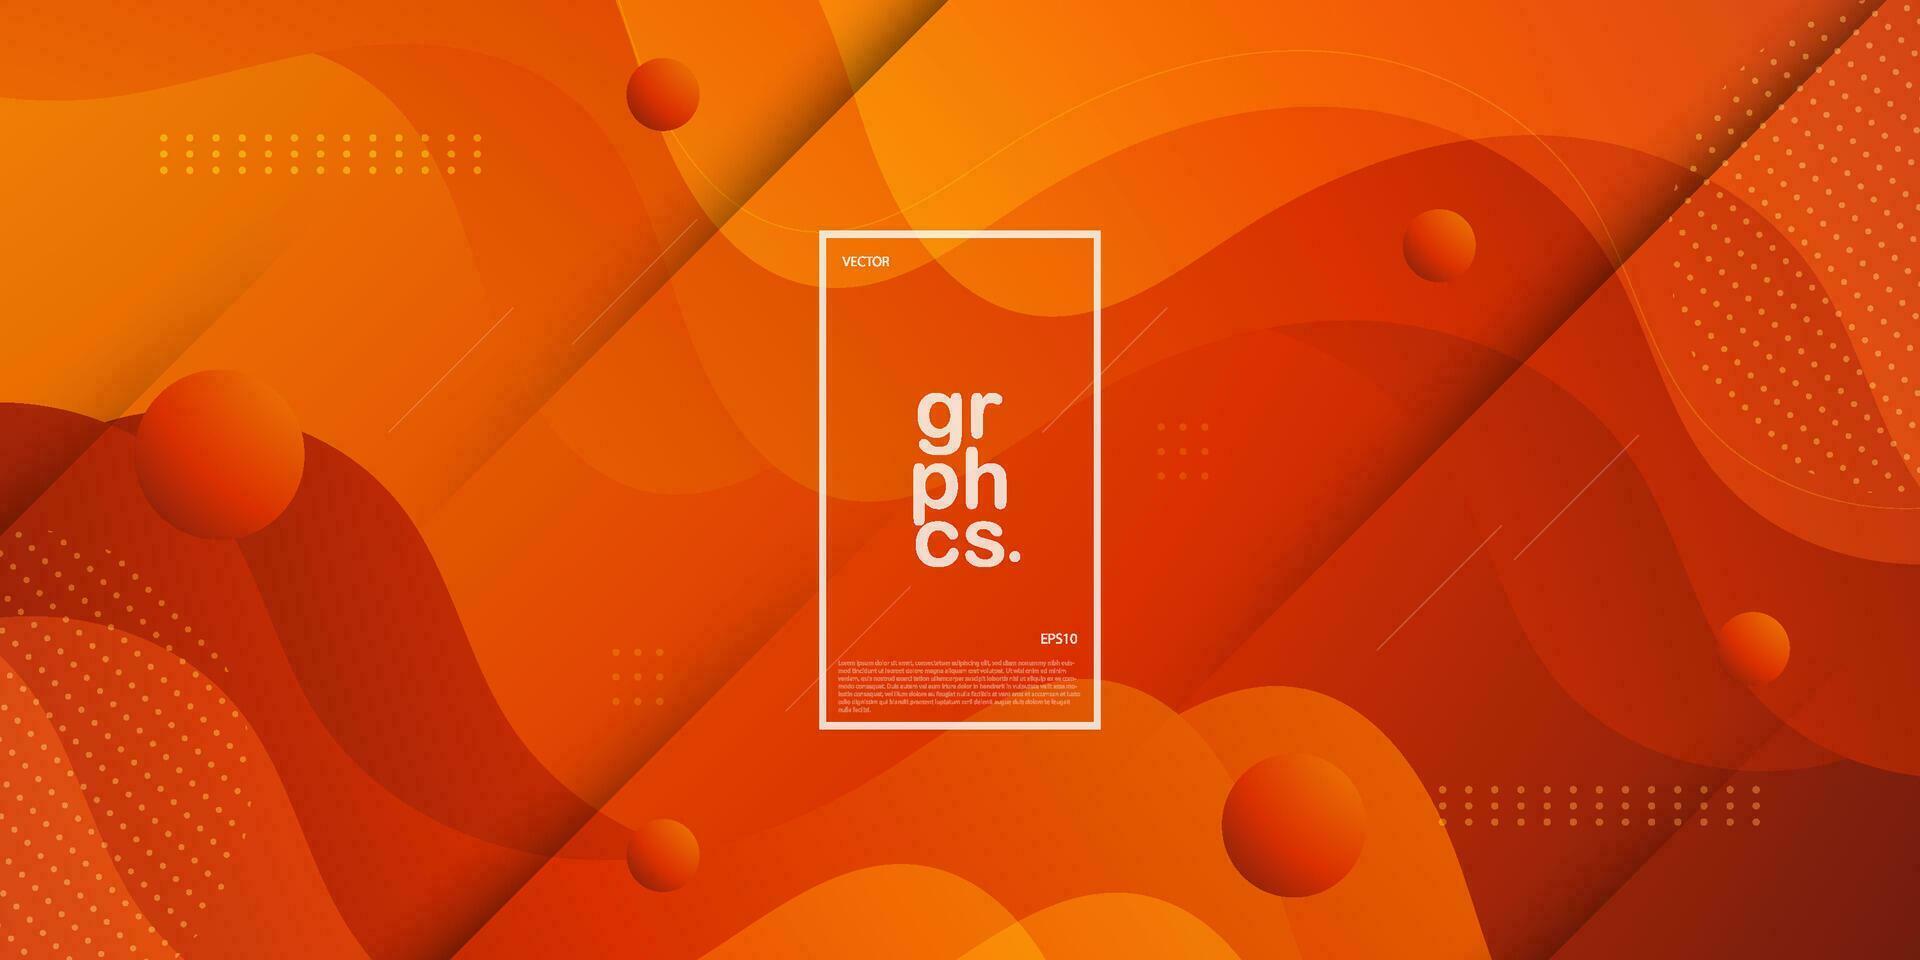 Modern wave orange textured background design in 3D style with dynamic orange color. EPS10 Vector